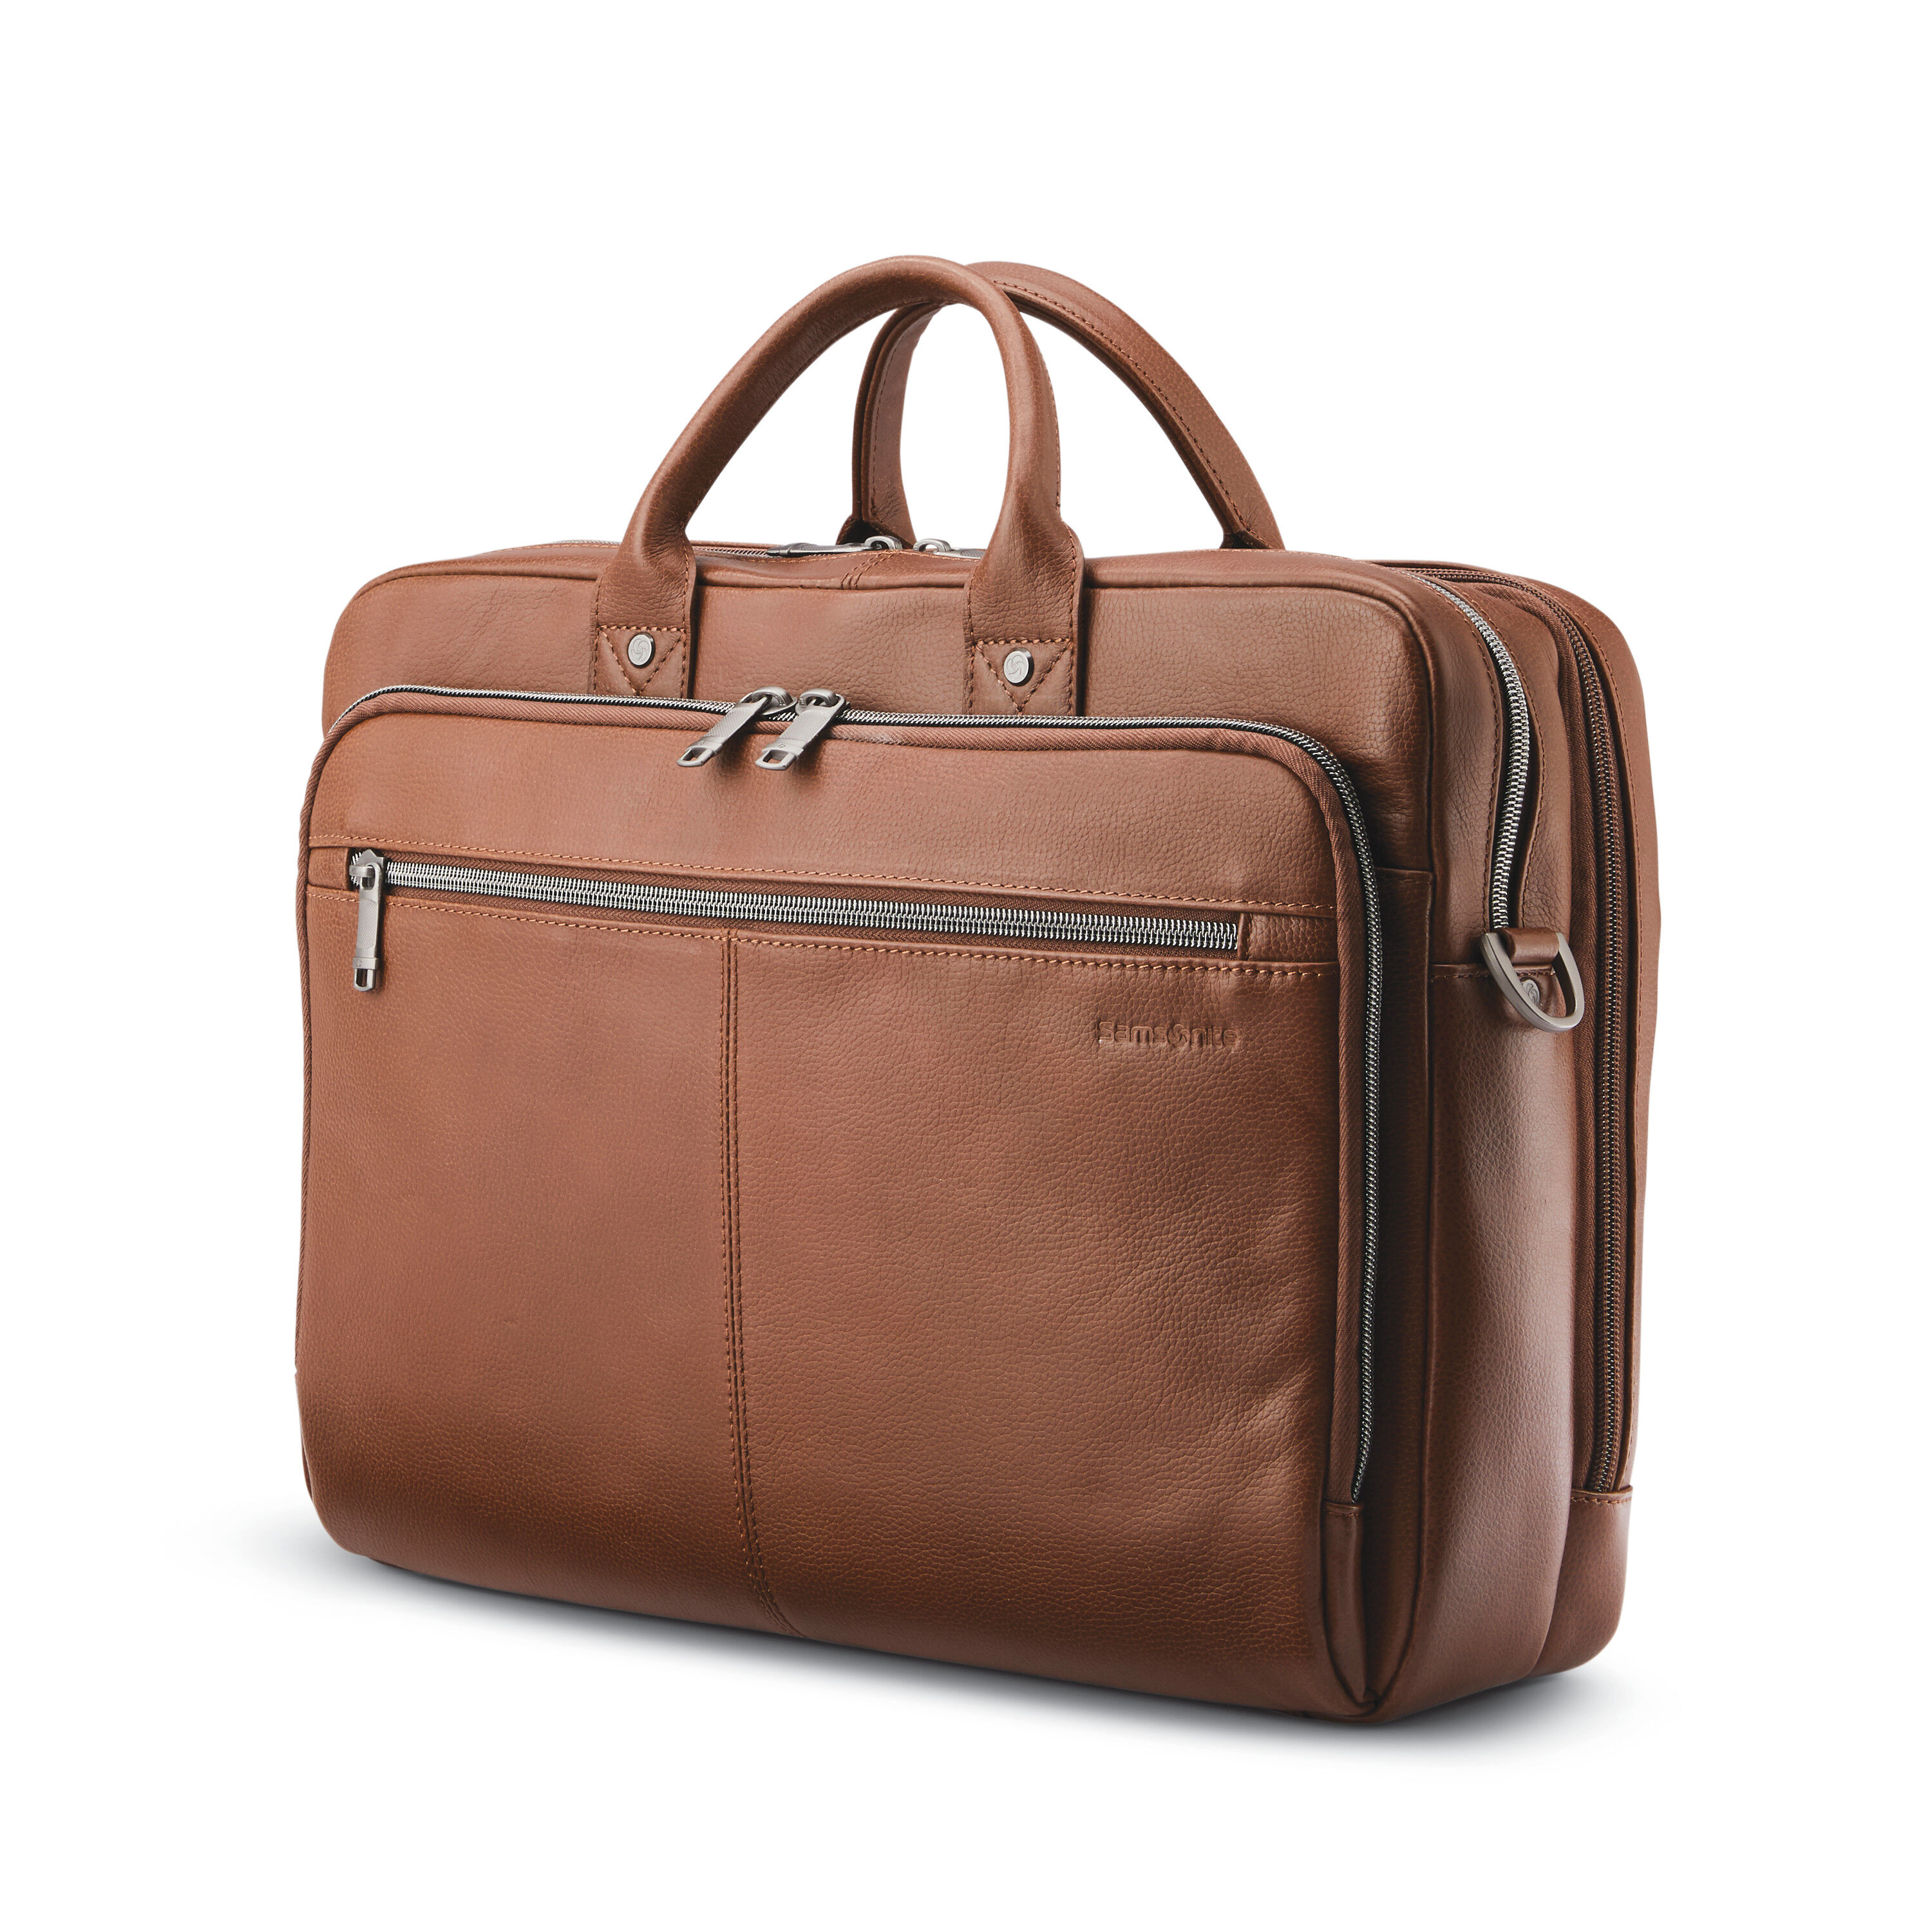 Samsonite Bag  Buy Samsonite Laptop Bags Trolley Bags Online